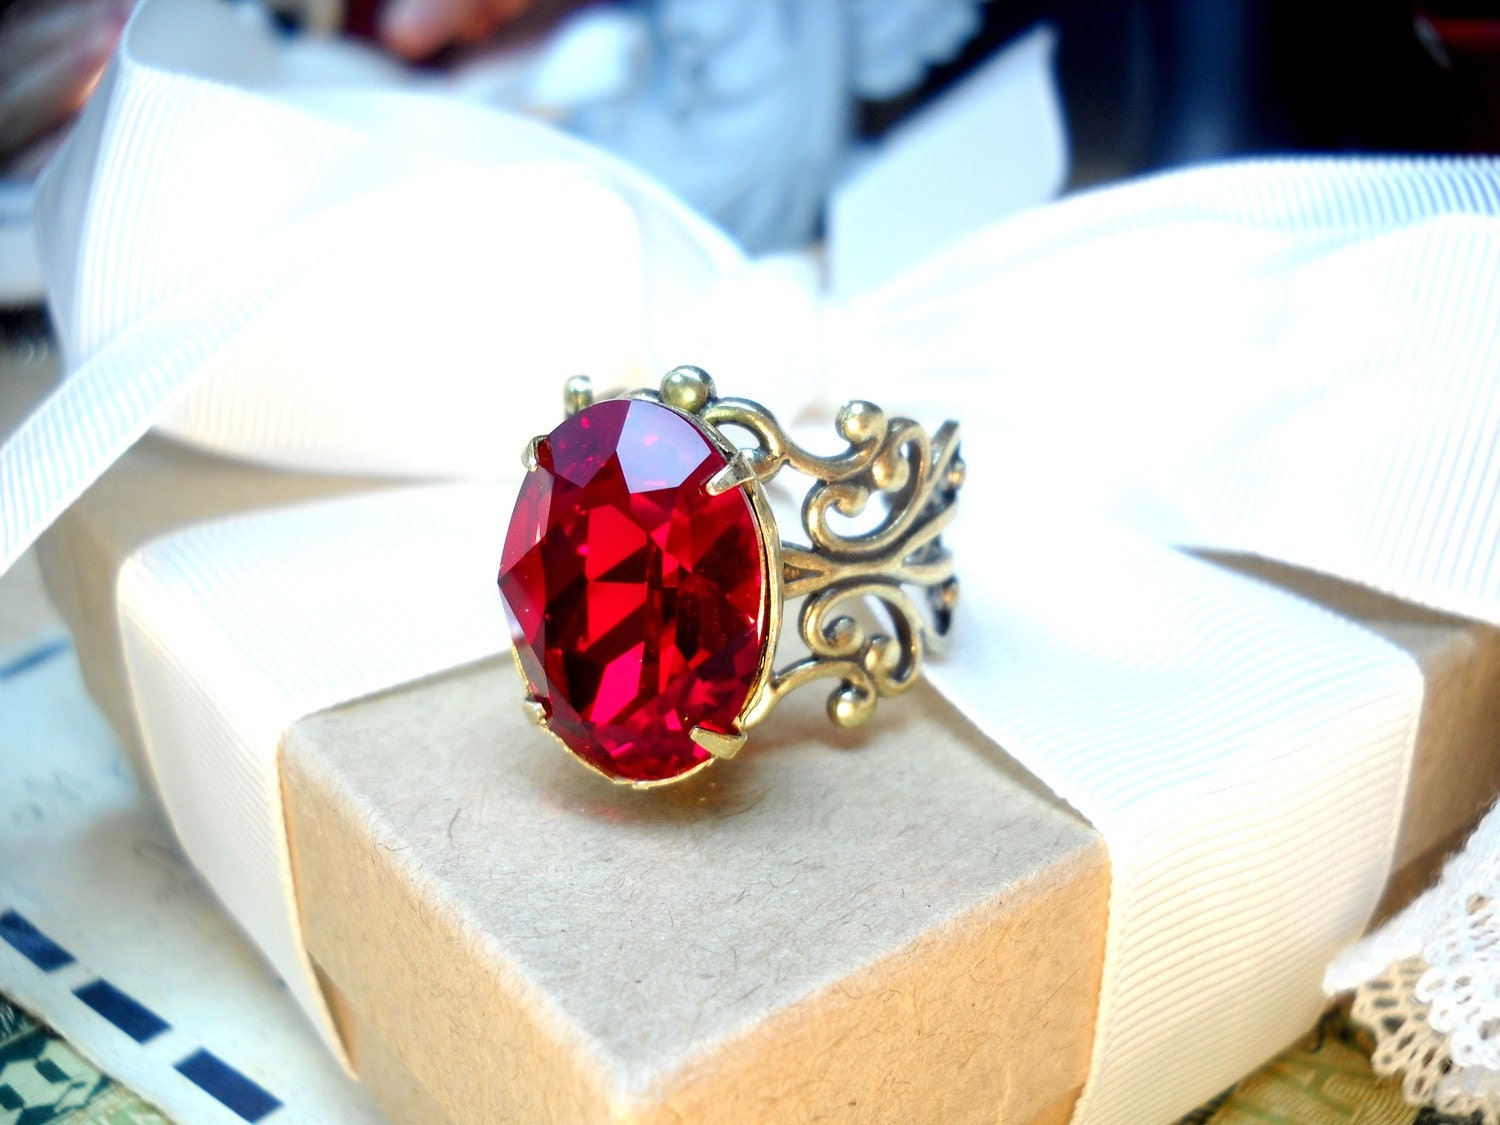 Royal Rose - Queen of Hearts - Swarovski Crystal - Vintage Estate Rhinestone Cocktail Ring. Alice in Wonderland Adjustable